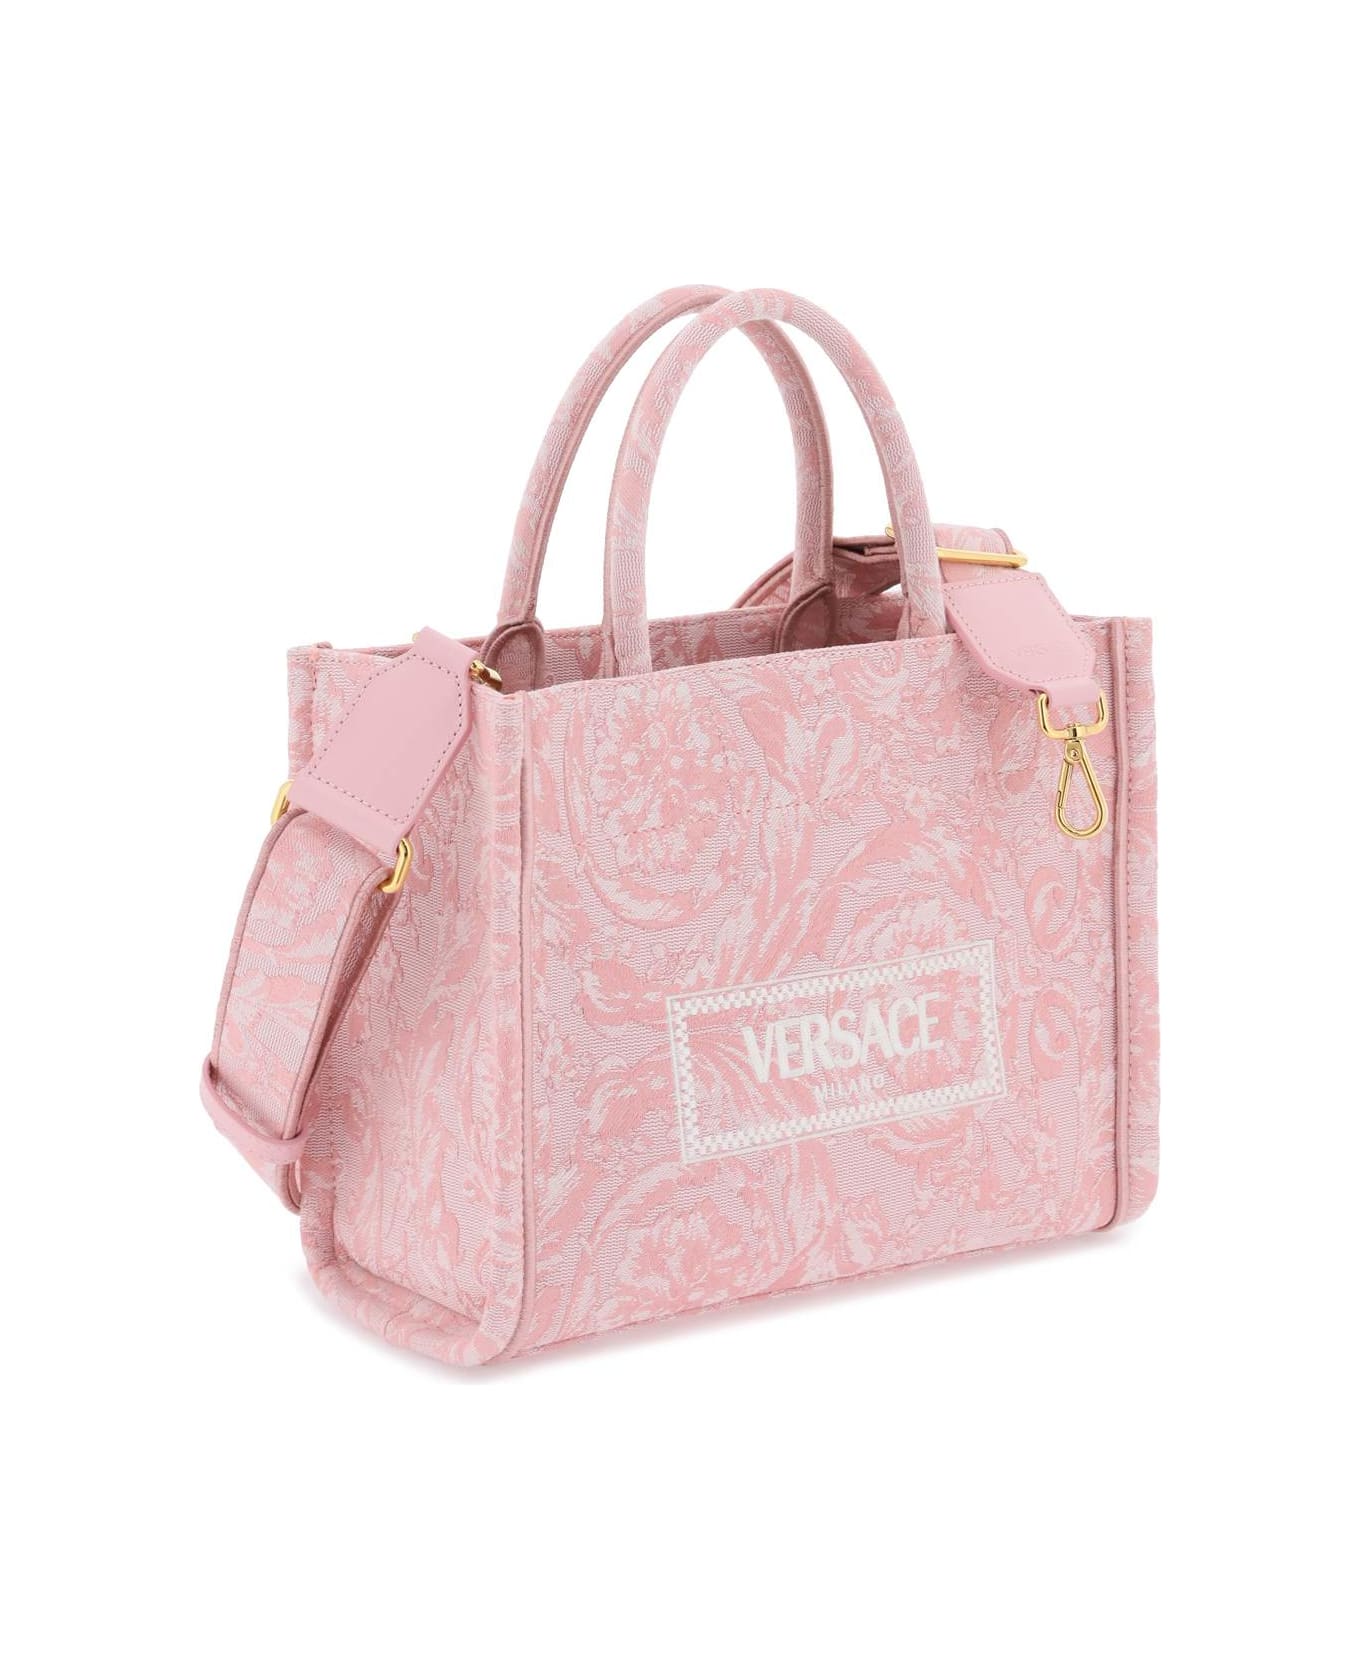 Versace Pink Woven Bag - Pink